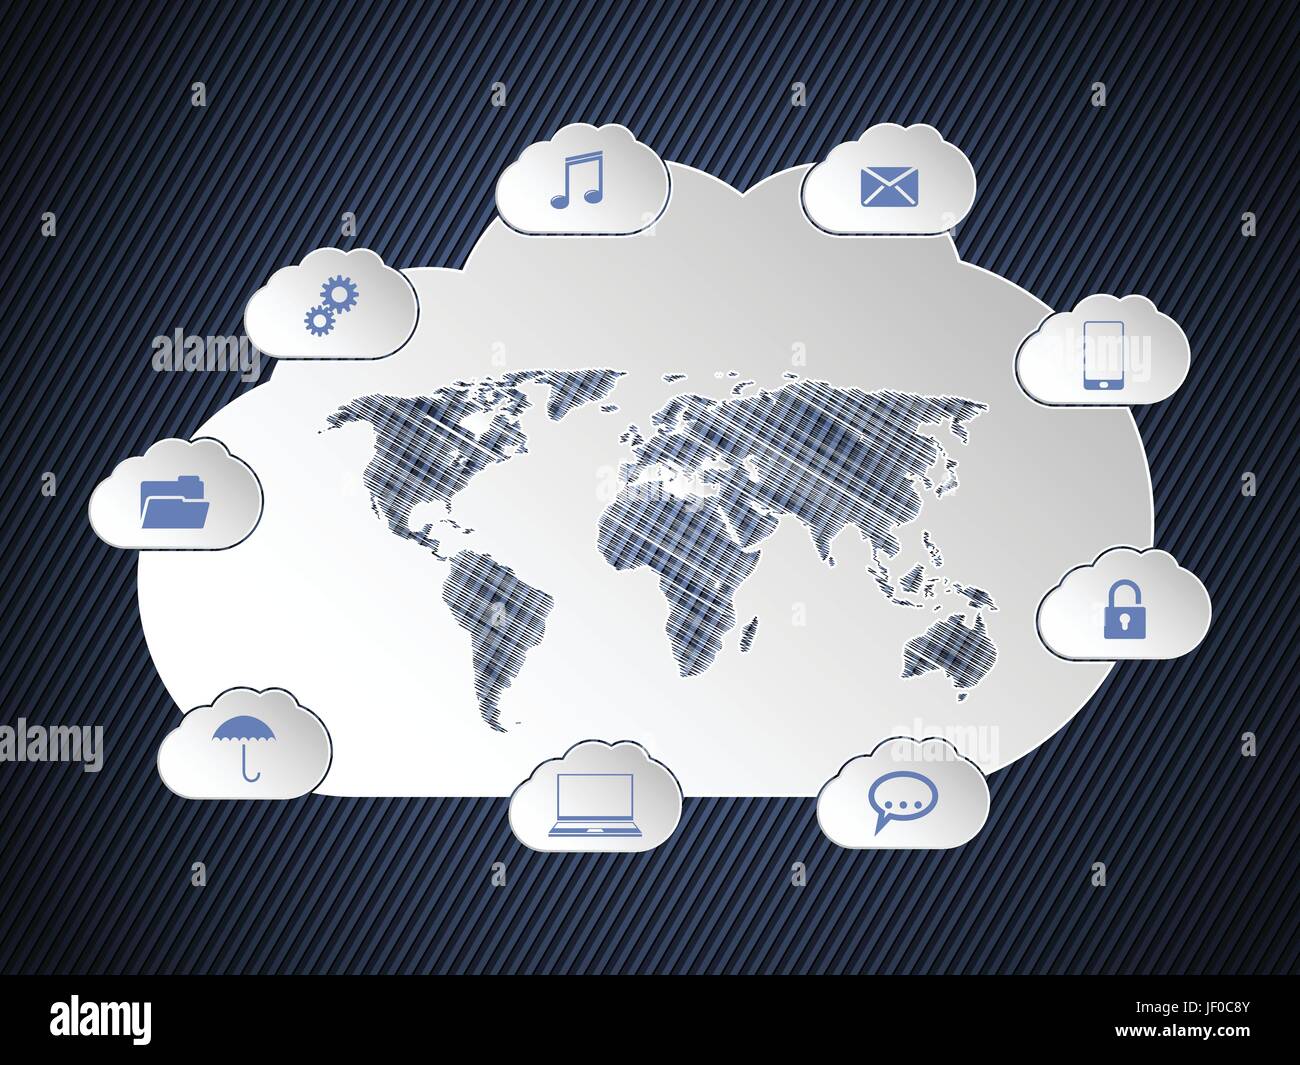 cloud, communication, networking, internet, www, worldwideweb, net, web, Stock Vector